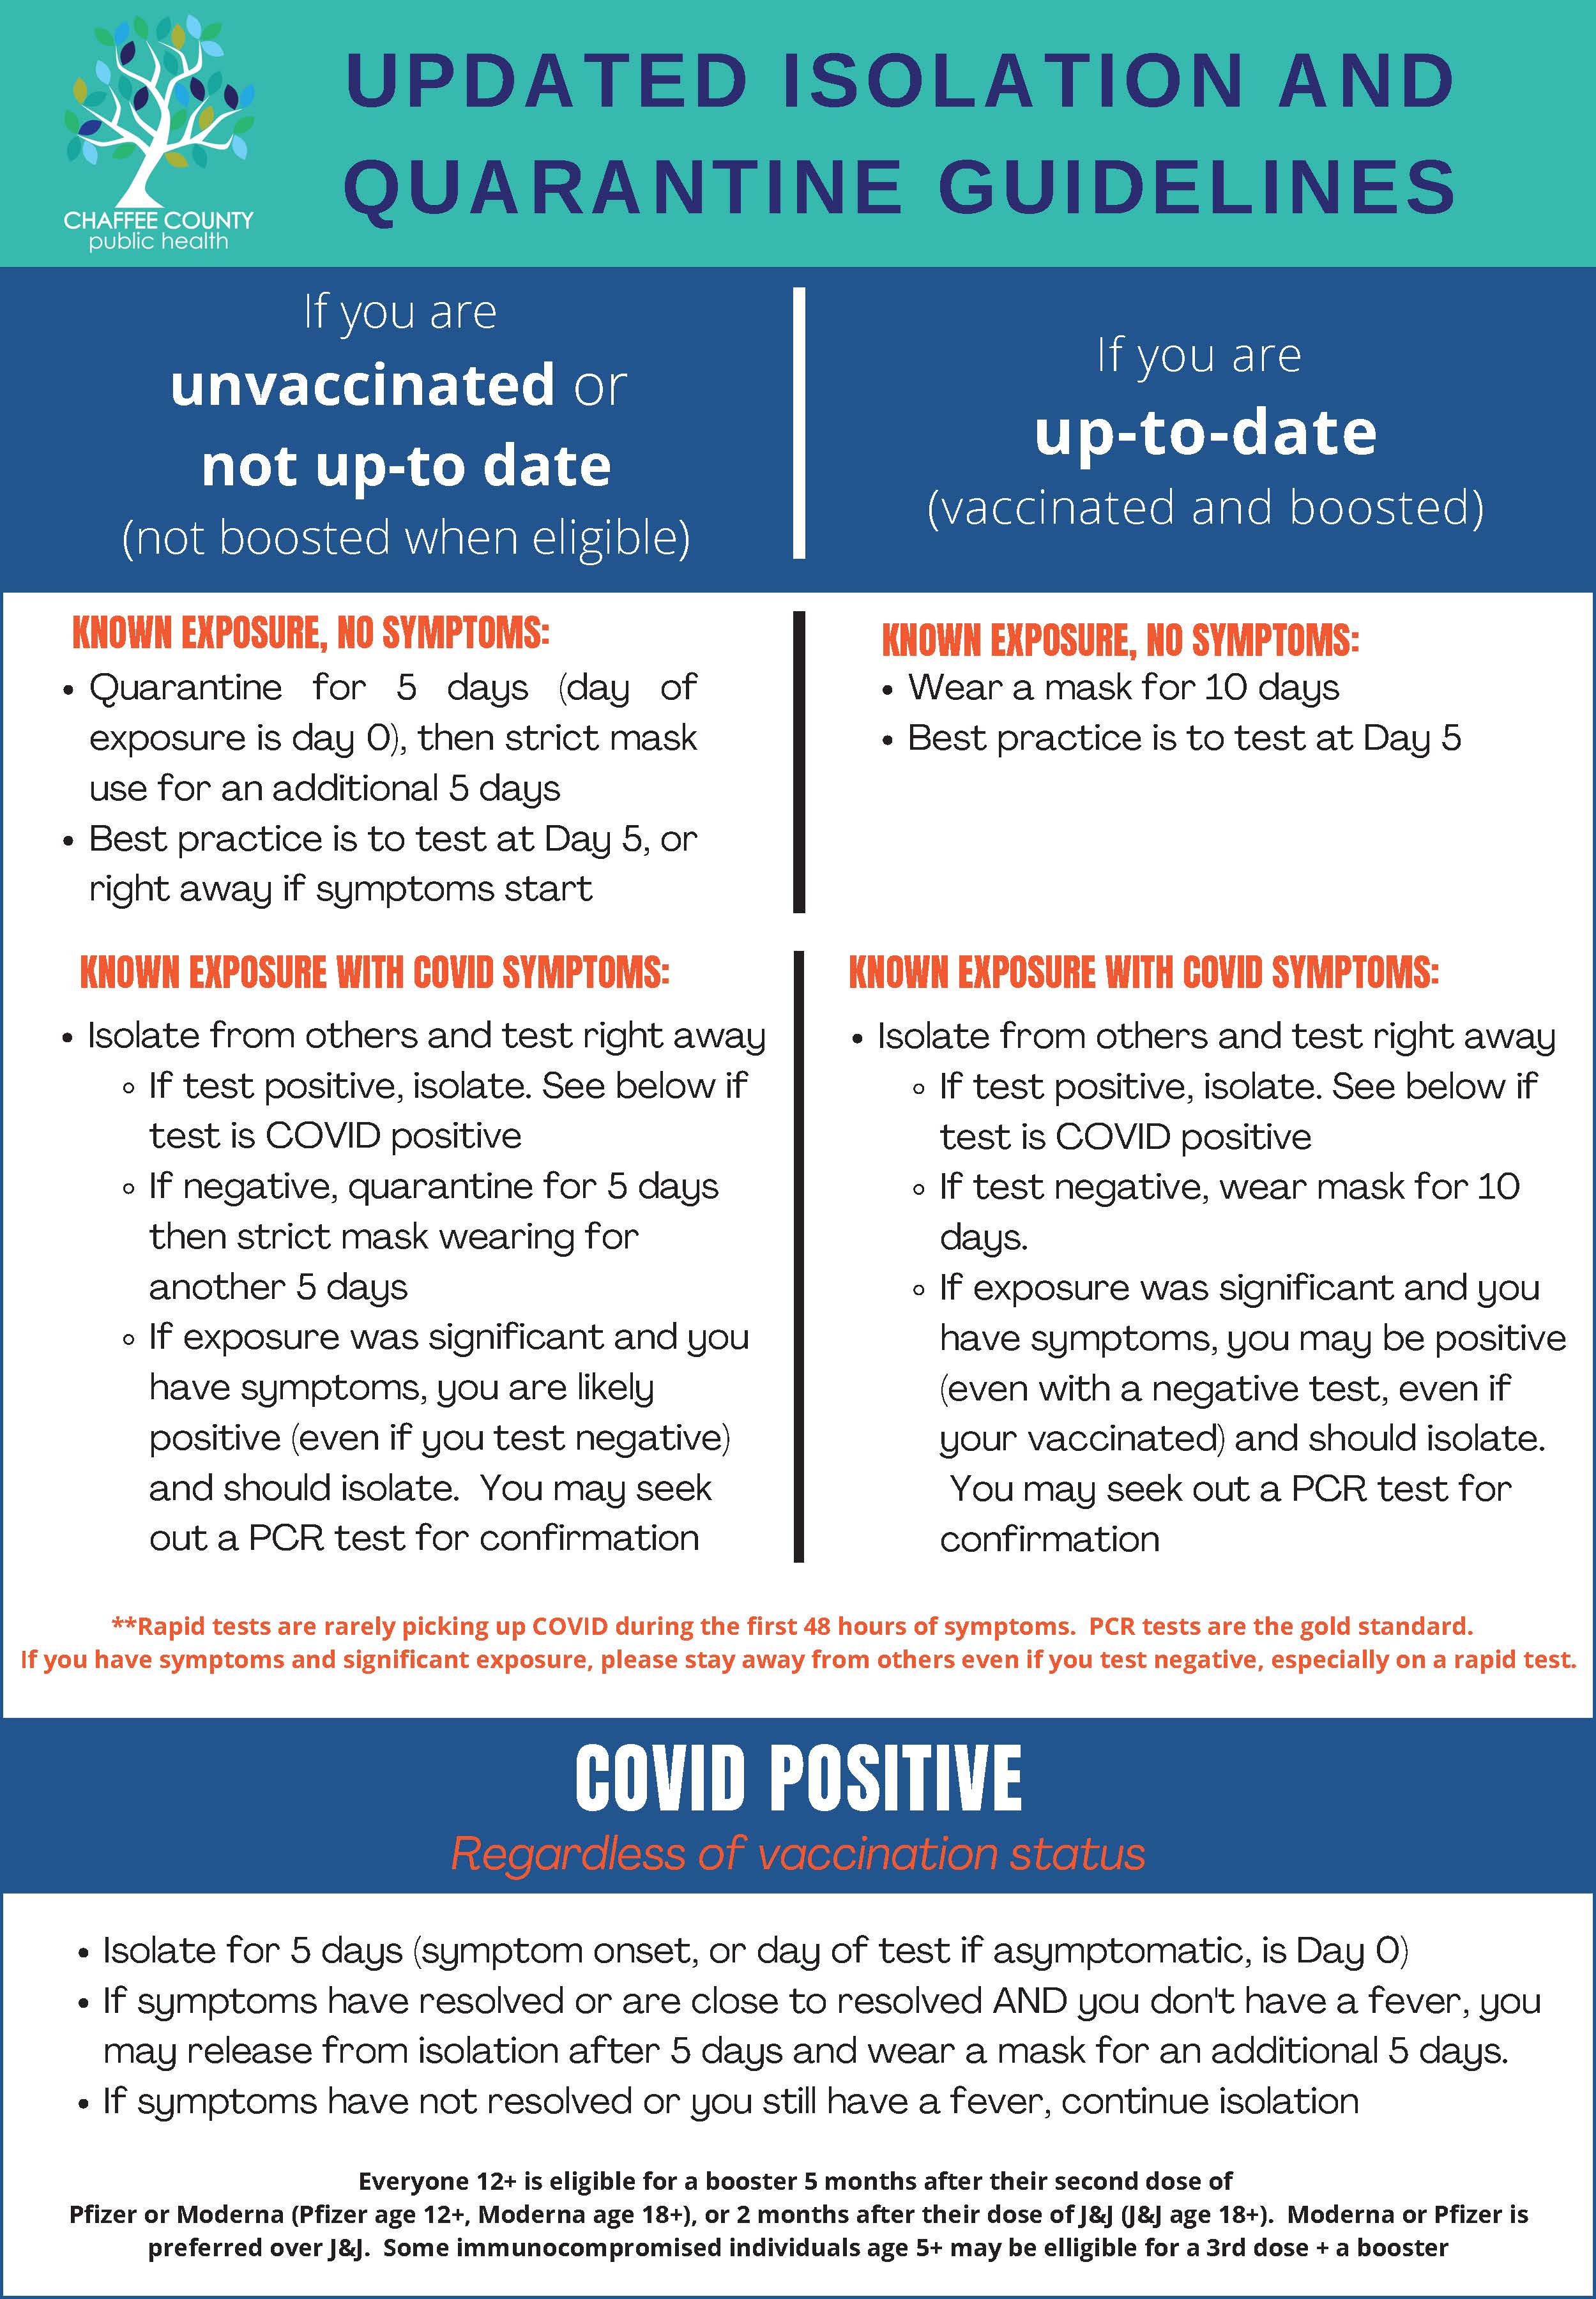 Covid-19 vaccine price list